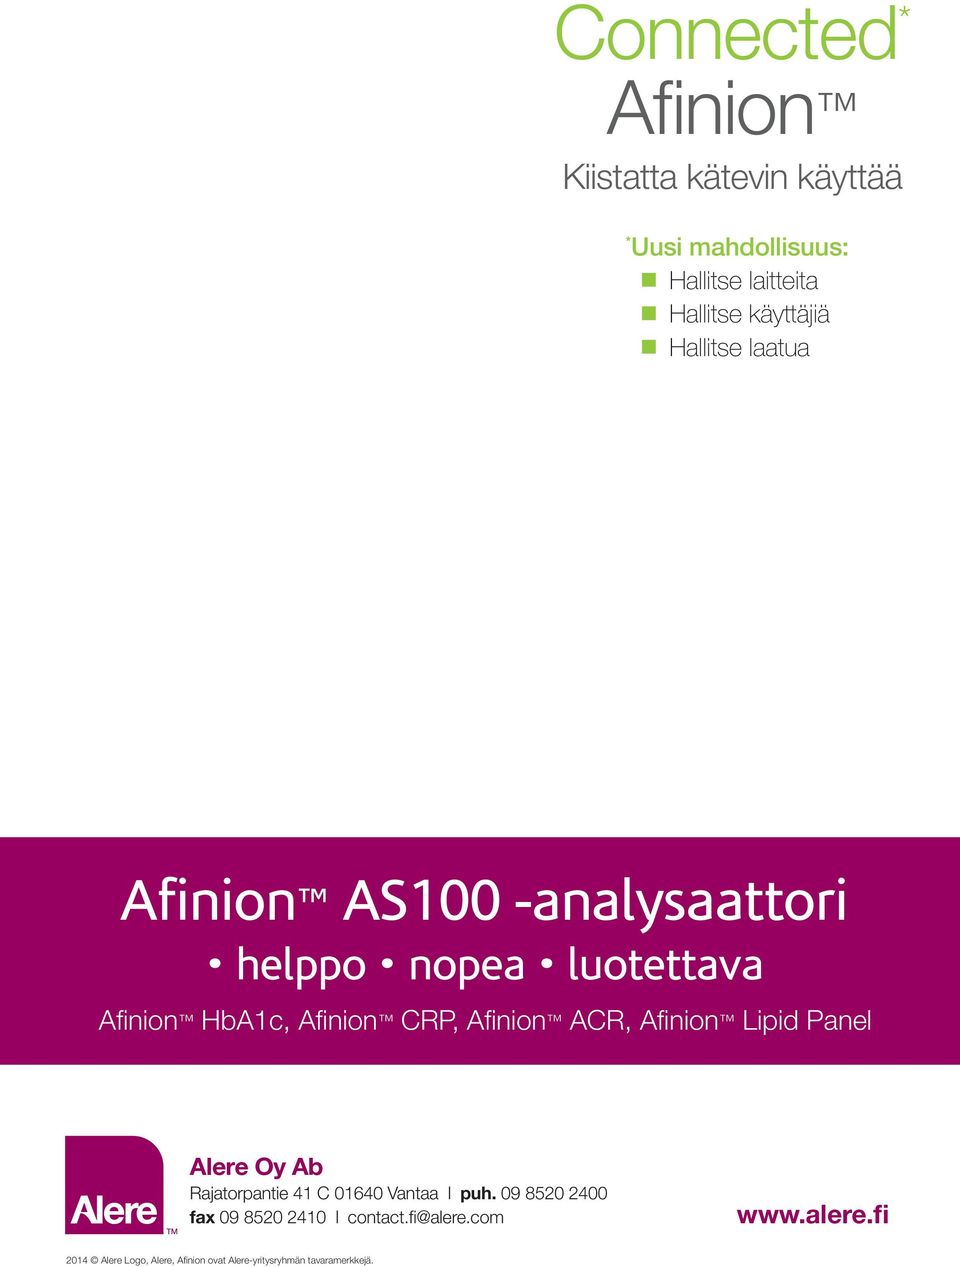 ACR, Afinion Lipid Panel Alere Oy Ab Rajatorpantie 41 C 01640 Vantaa l puh.